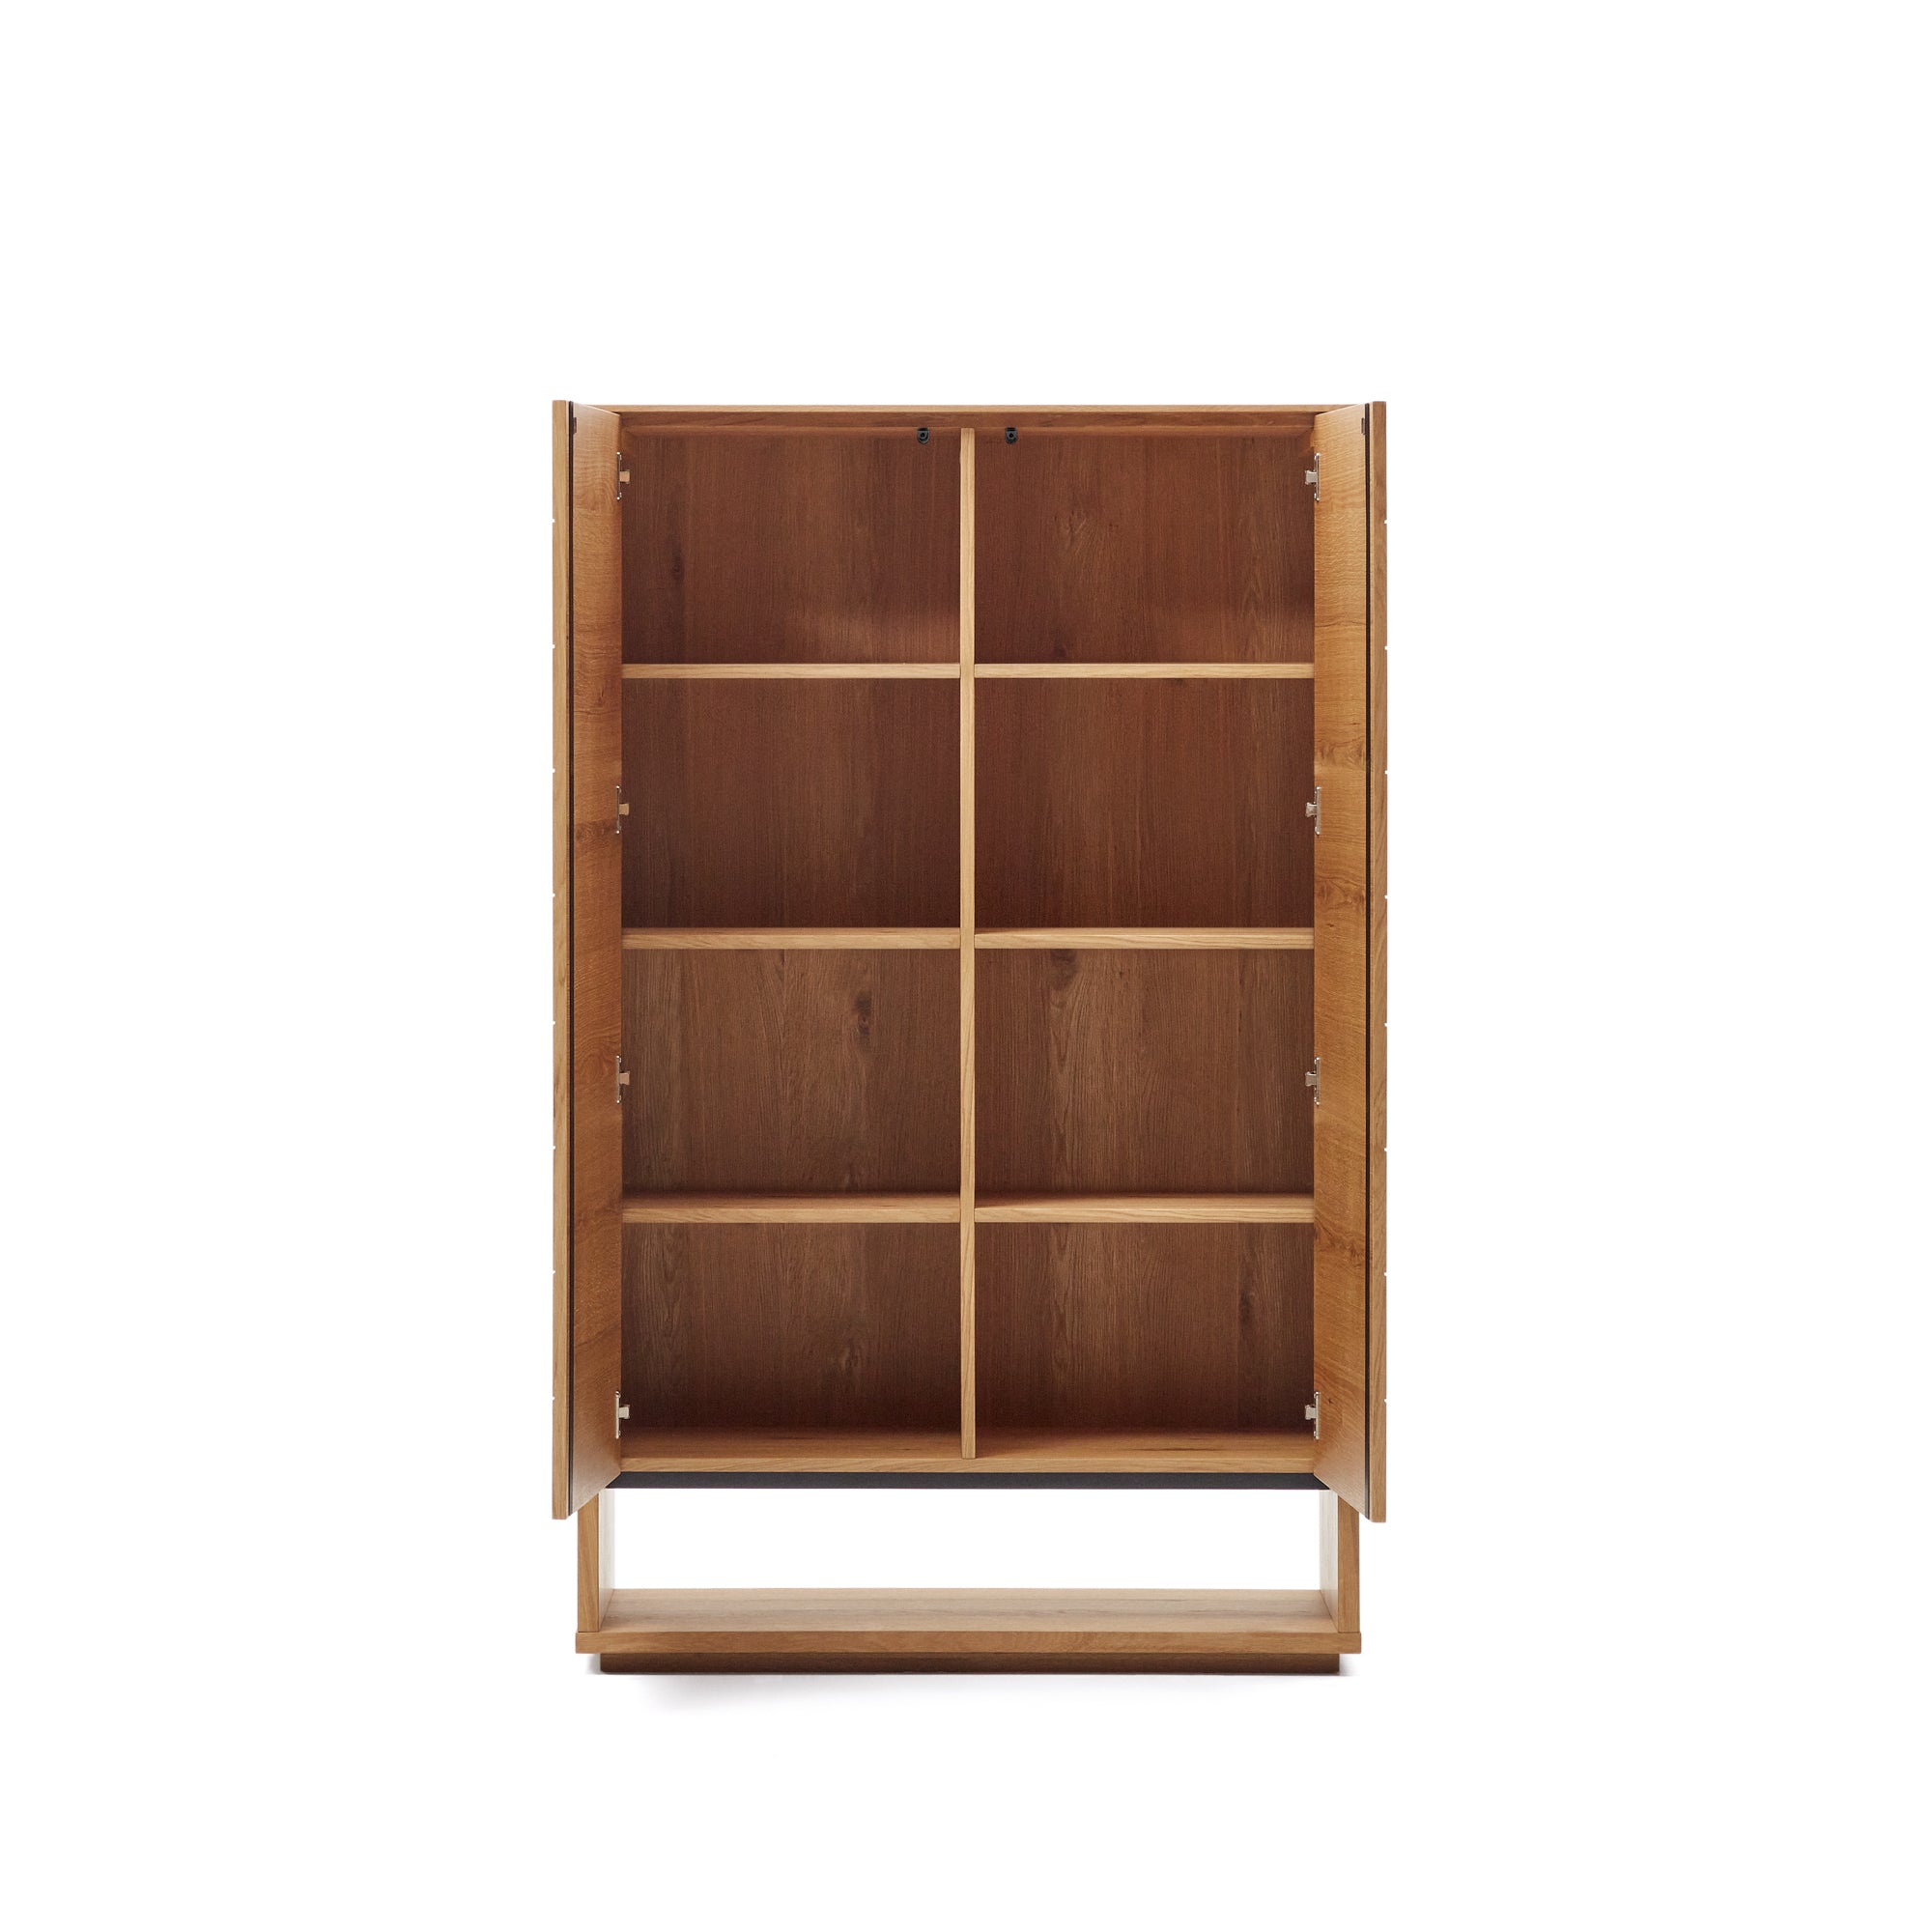 Alguema magas komód 2 ajtóval, tölgyfa furnérból, natúr kivitelben, 100 x 163,5 cm